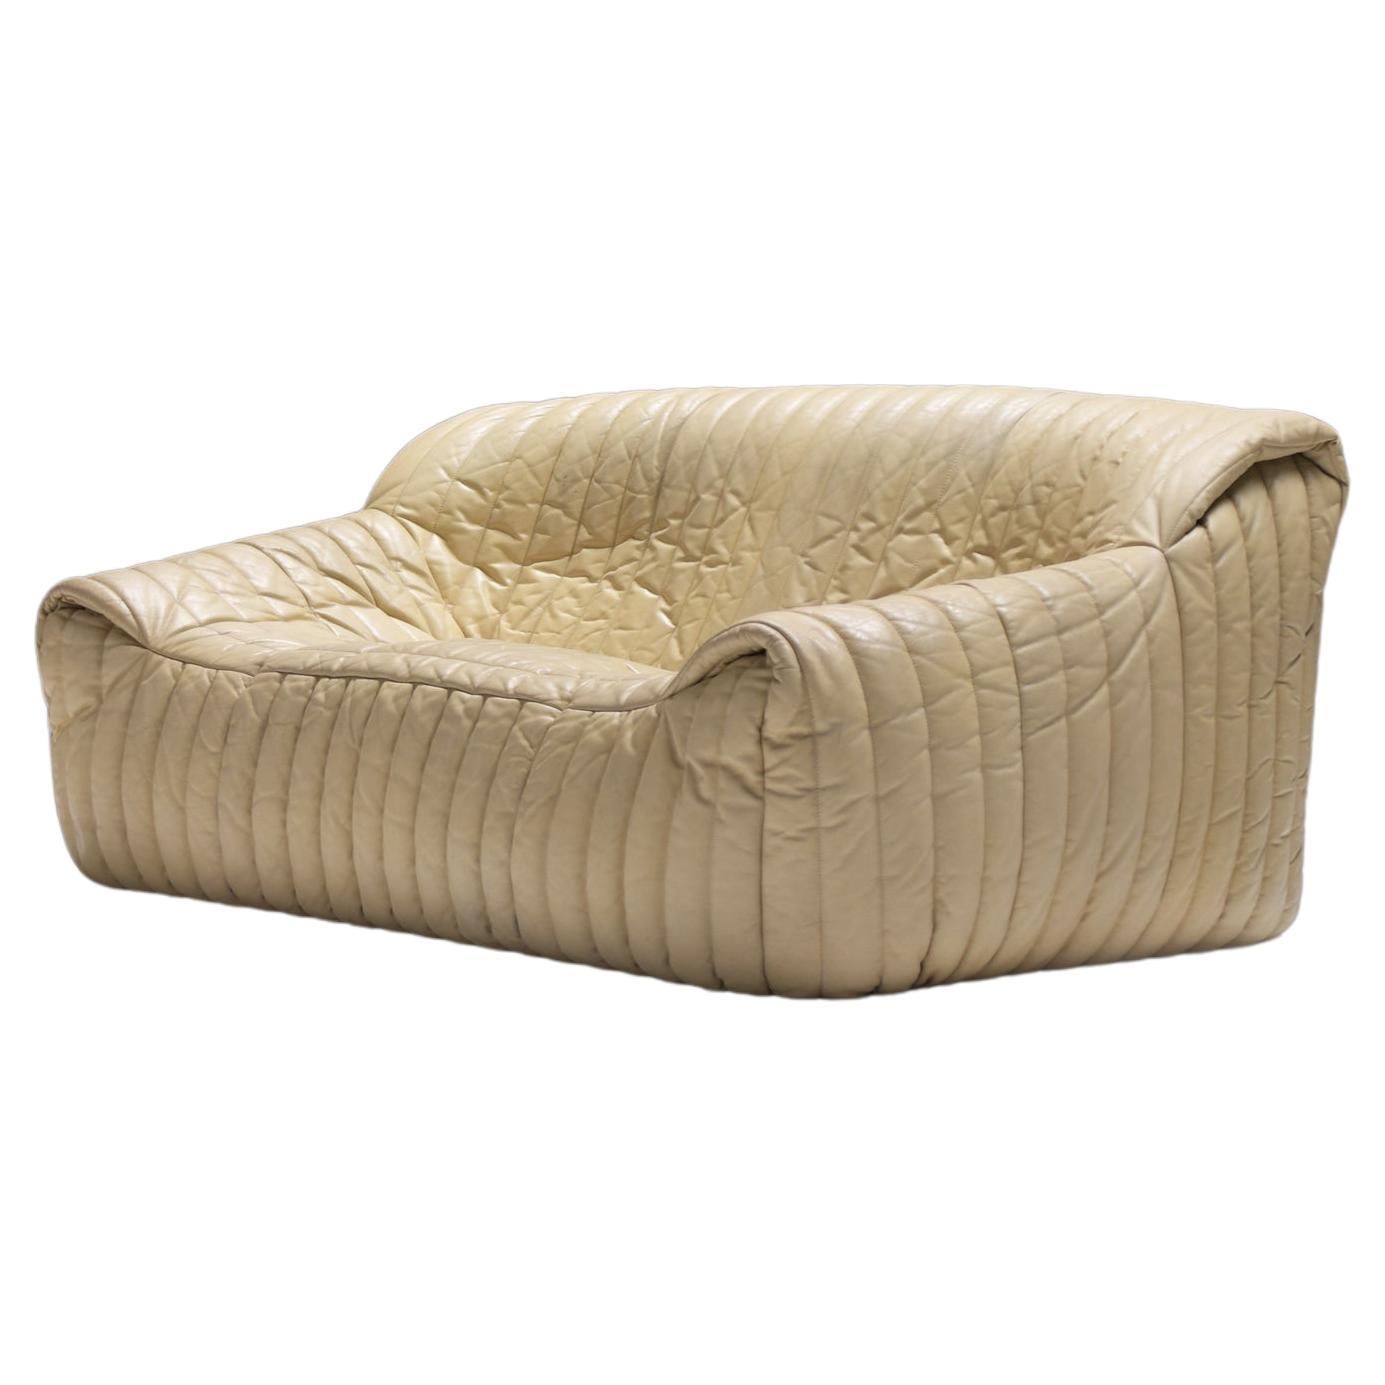 Rare vintage Sandra sofa in original leather - Annie Hieronimus for Cinna France For Sale